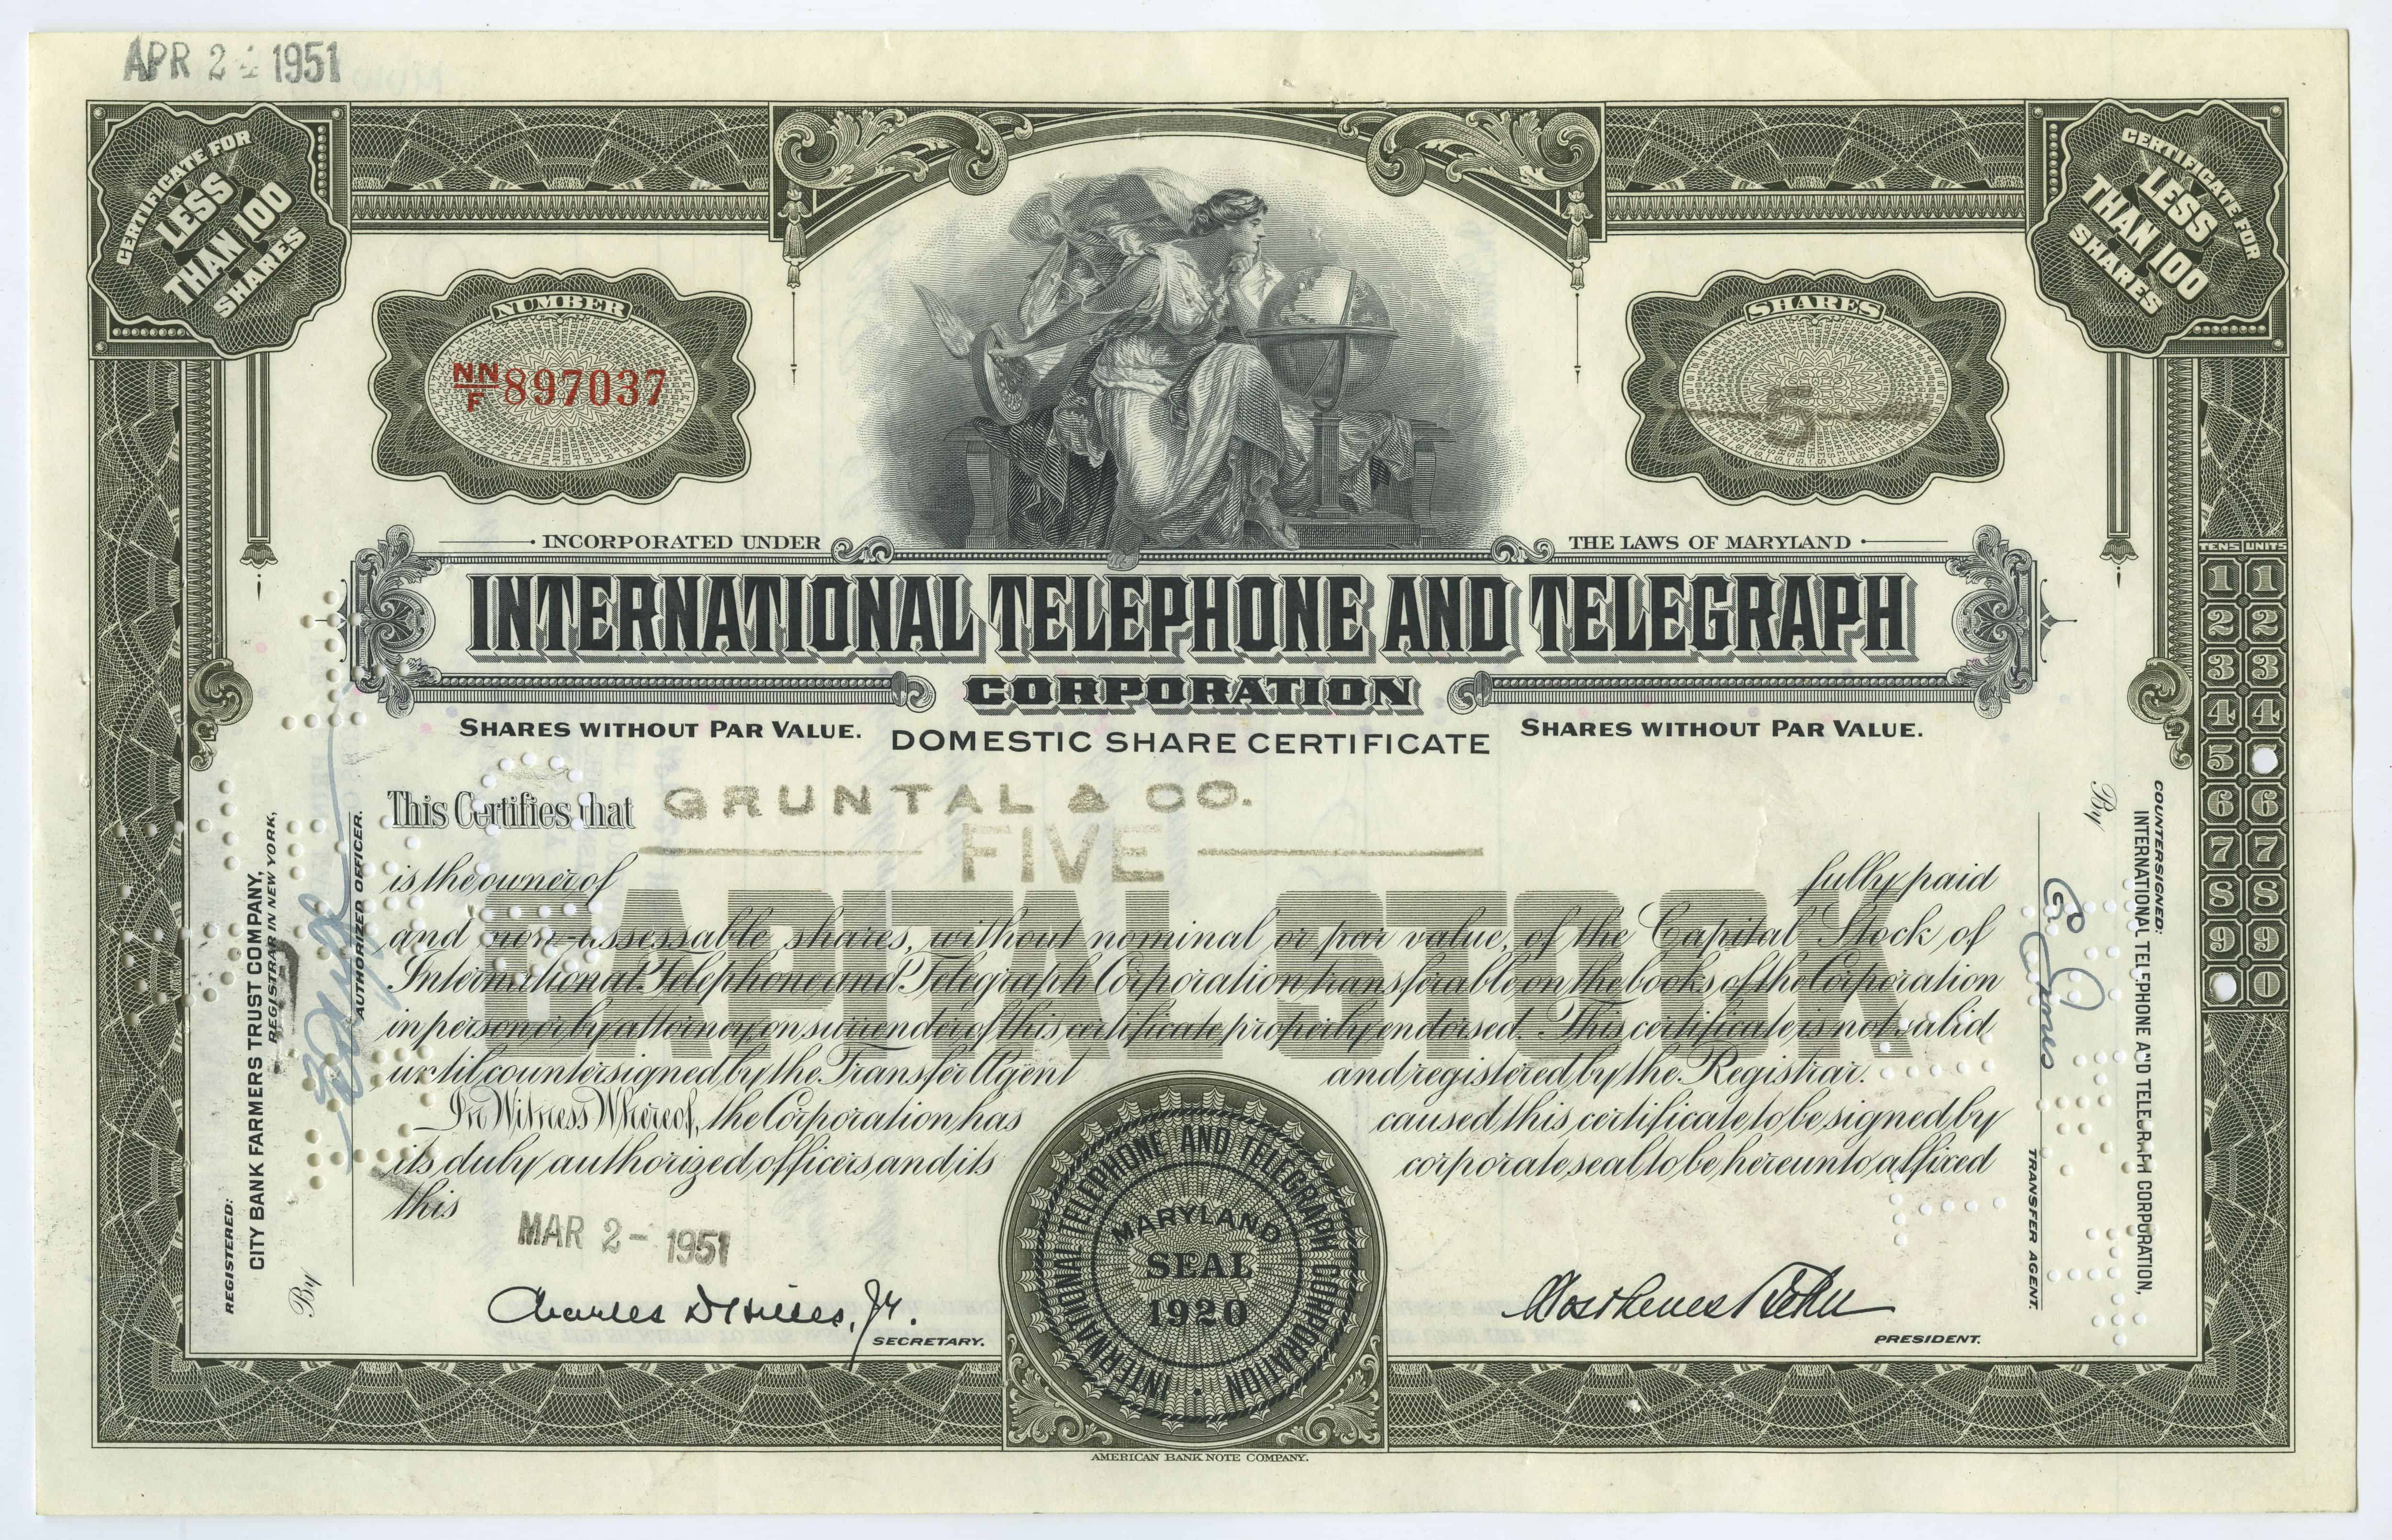 5 akcji spółki International Telephone and Telegraph Corporation z dnia 2 marca 1951 roku